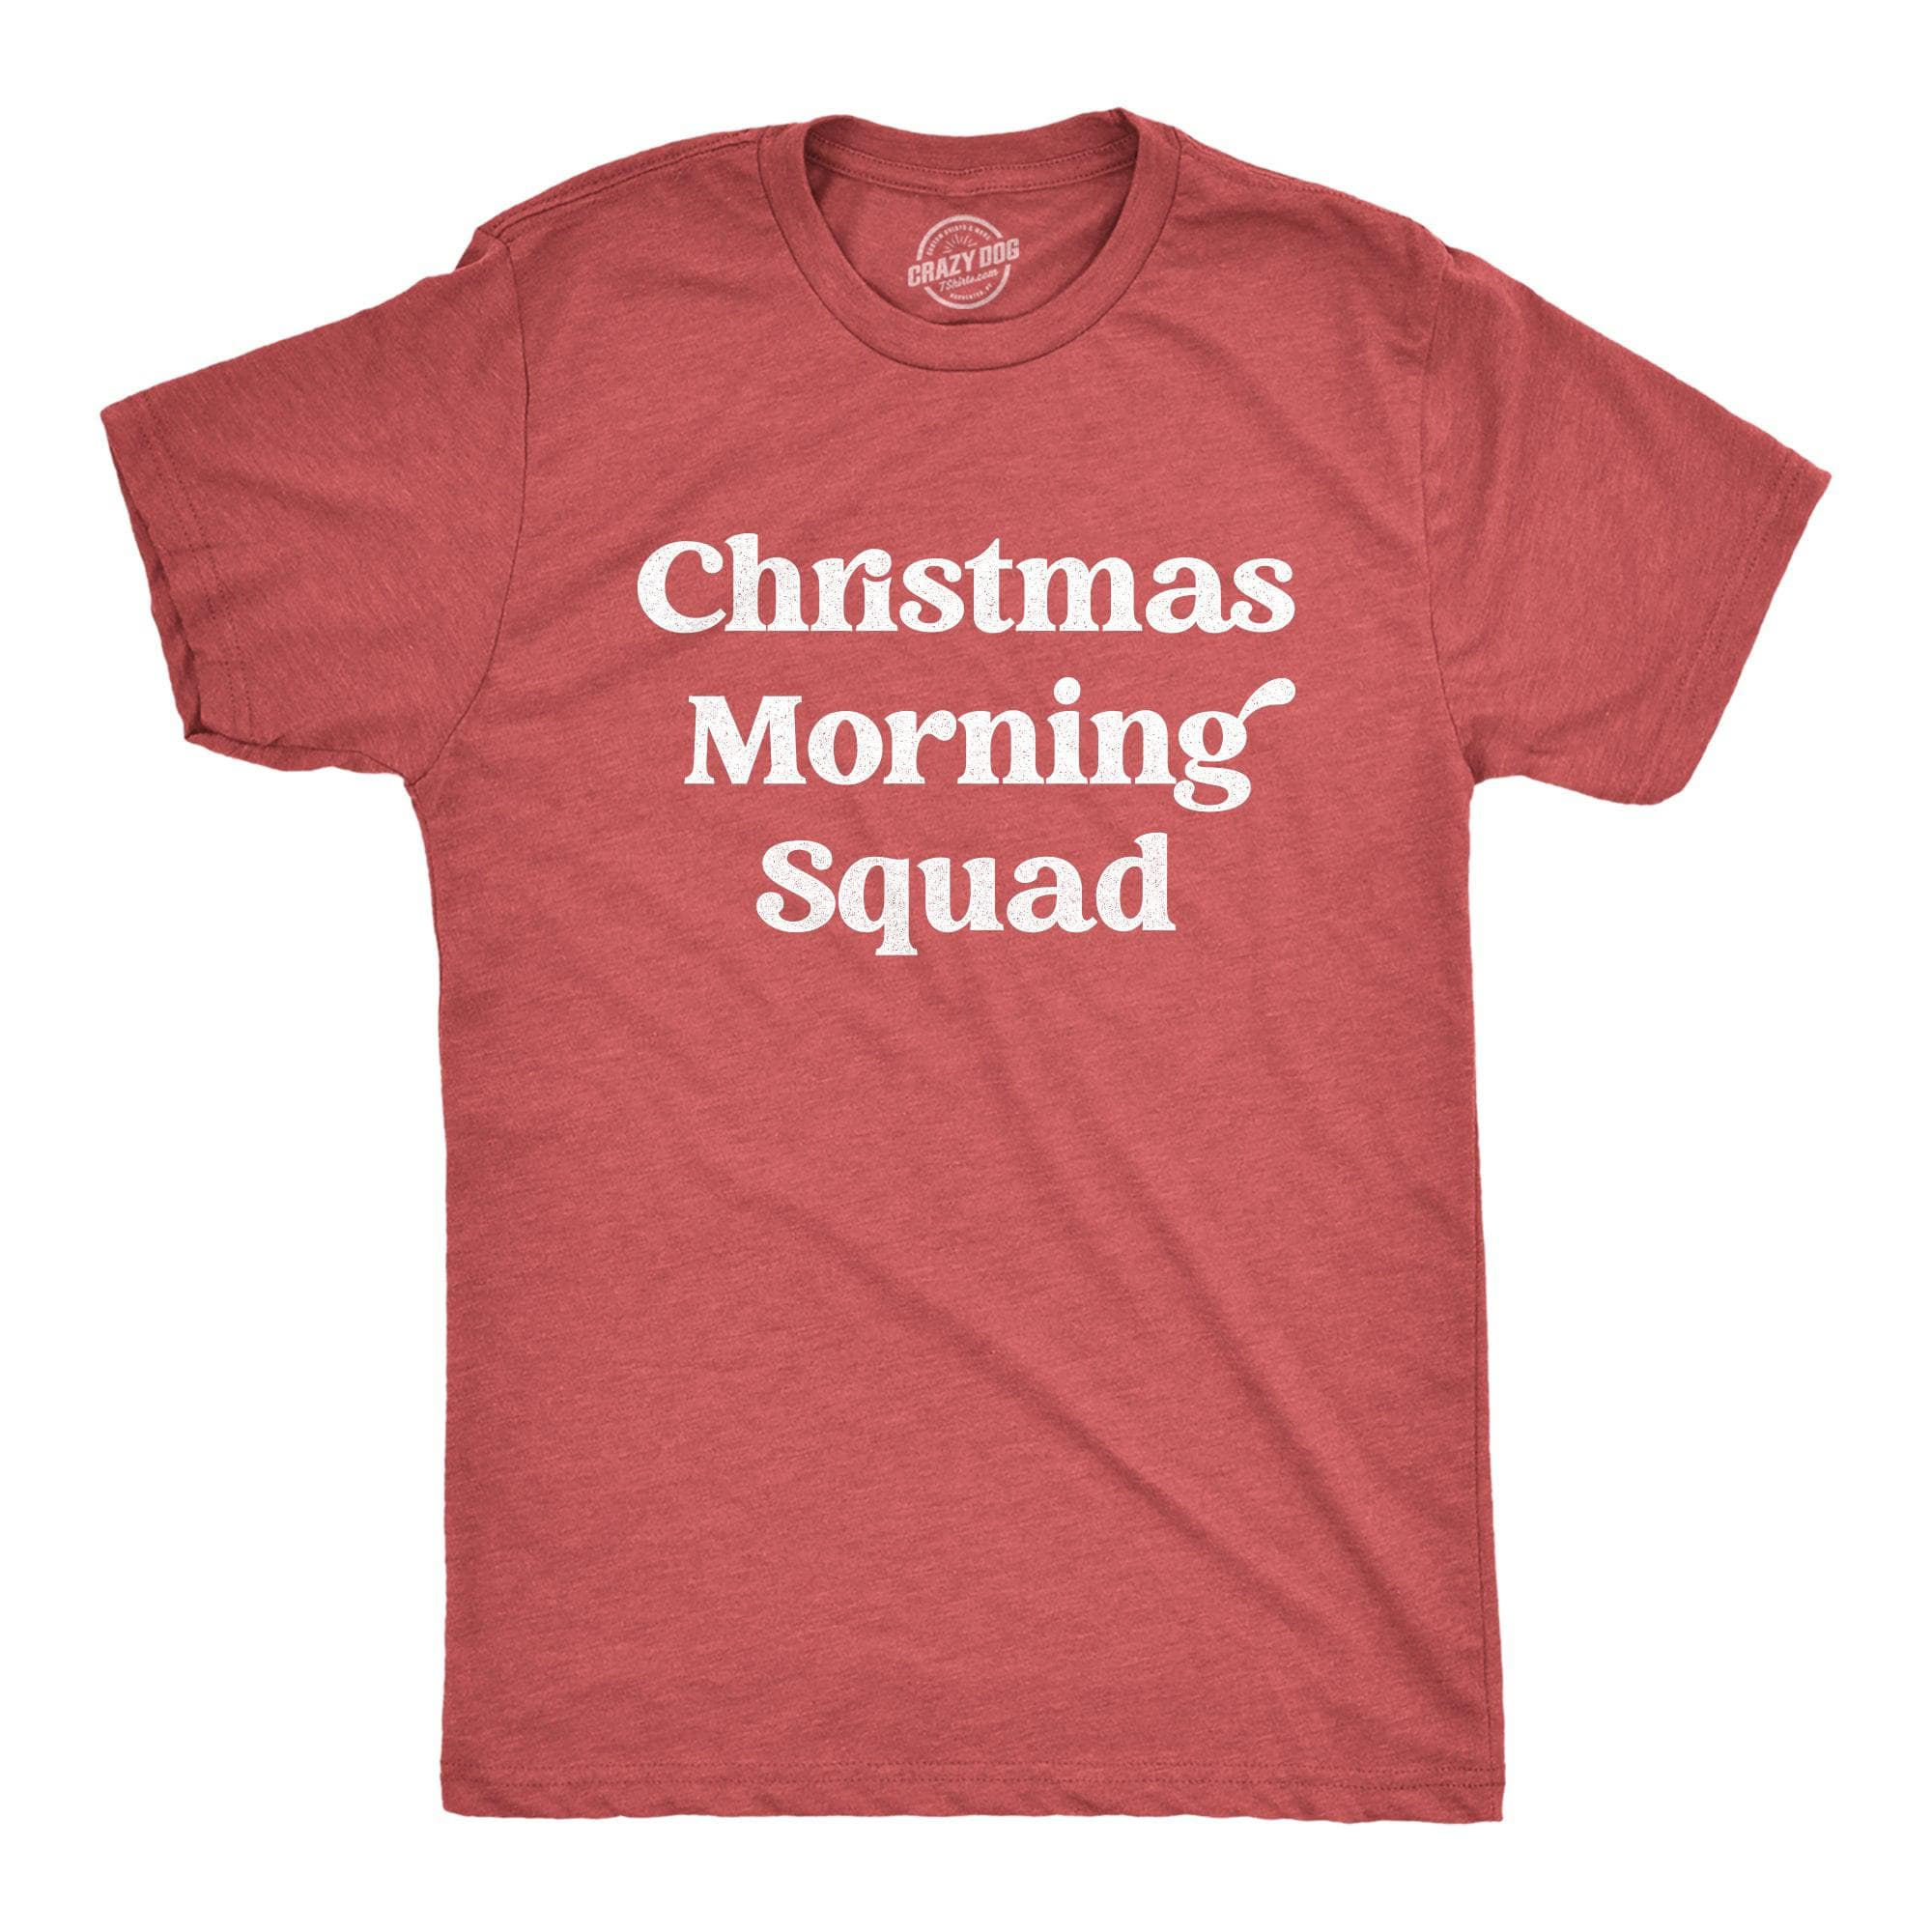 Christmas Baking Team Men's Tshirt  -  Crazy Dog T-Shirts